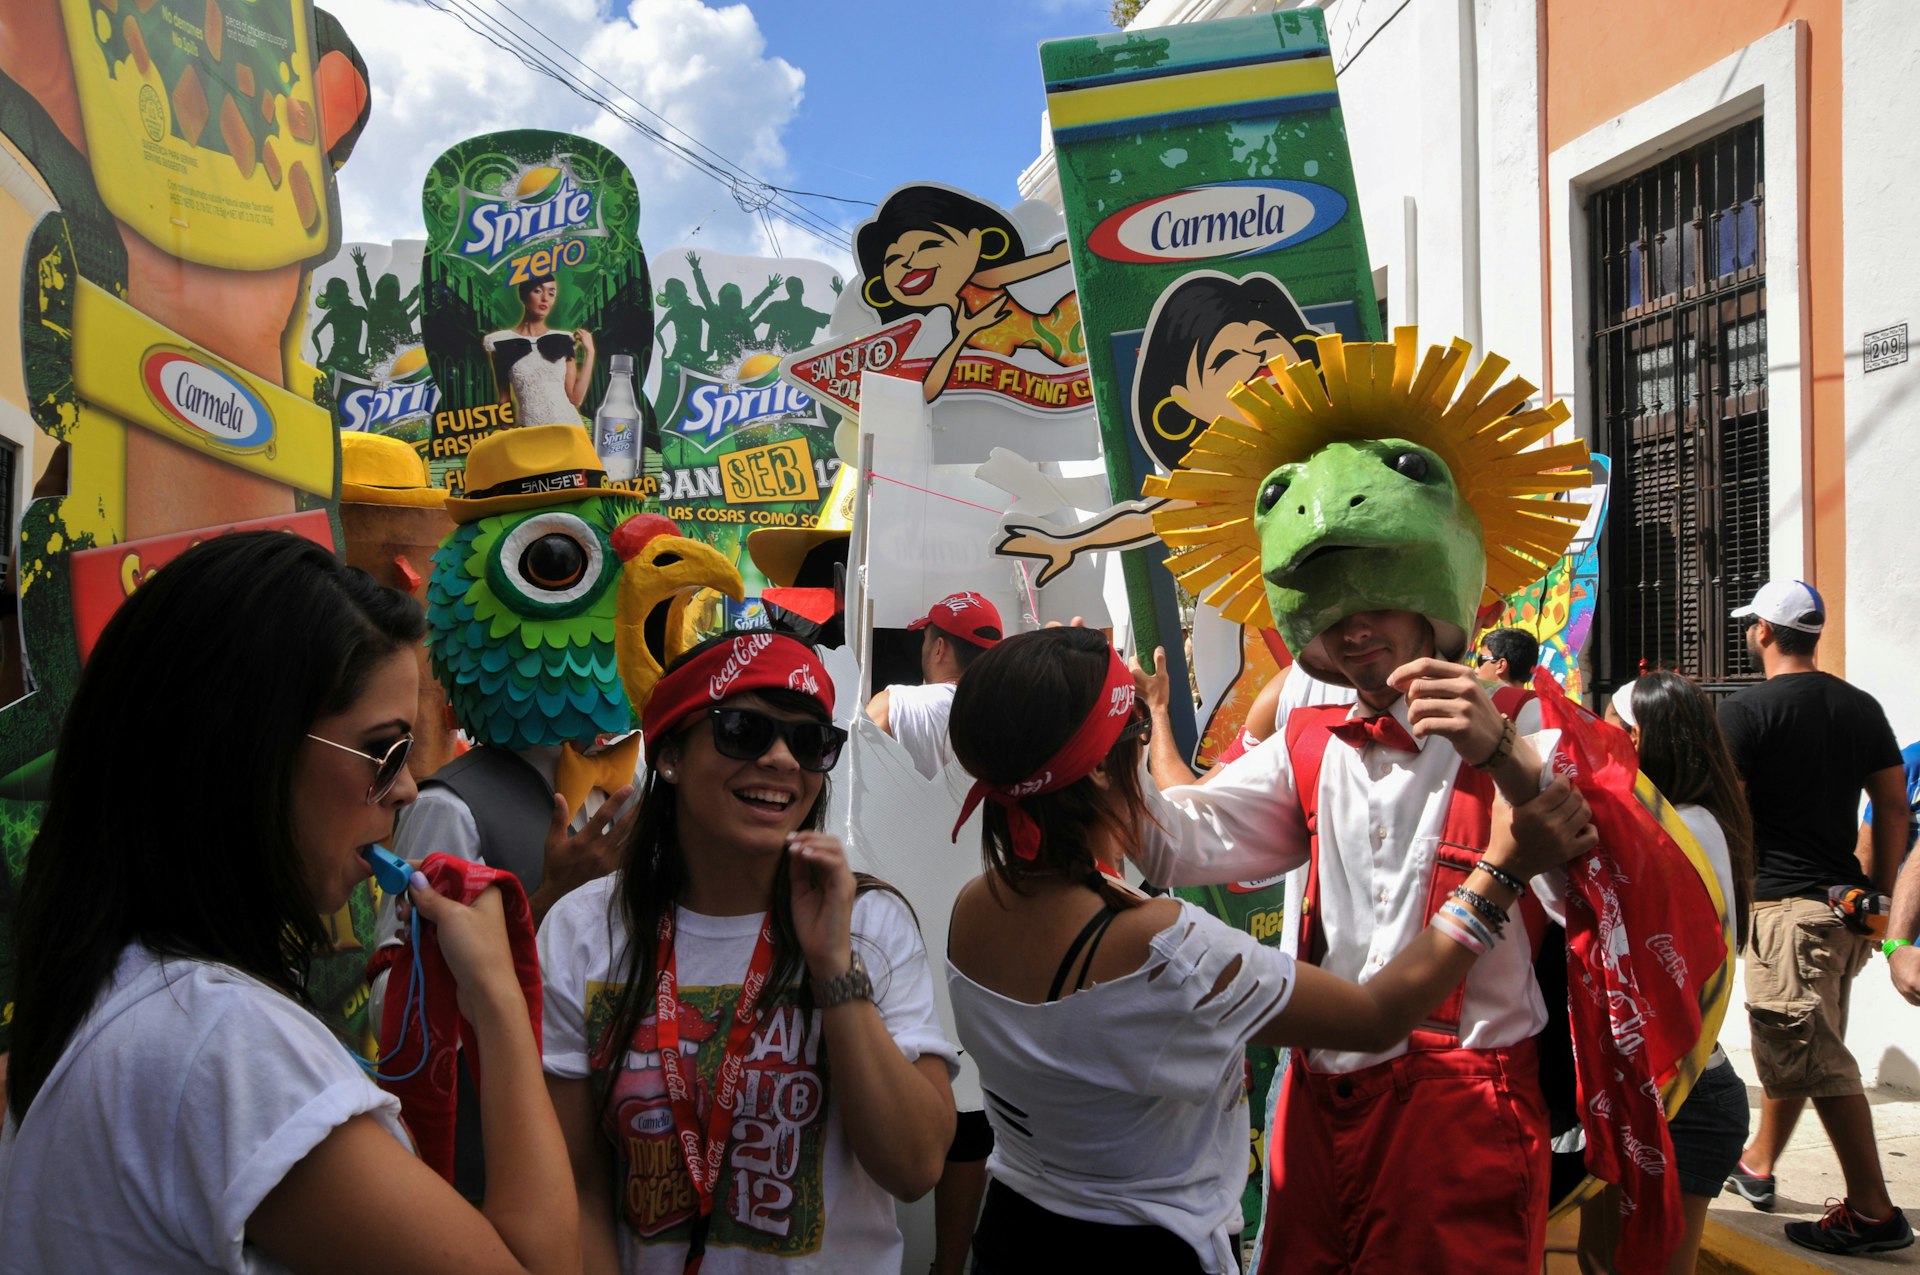 Participants on the street during Saint Sebastian street festival in Puerto Rico